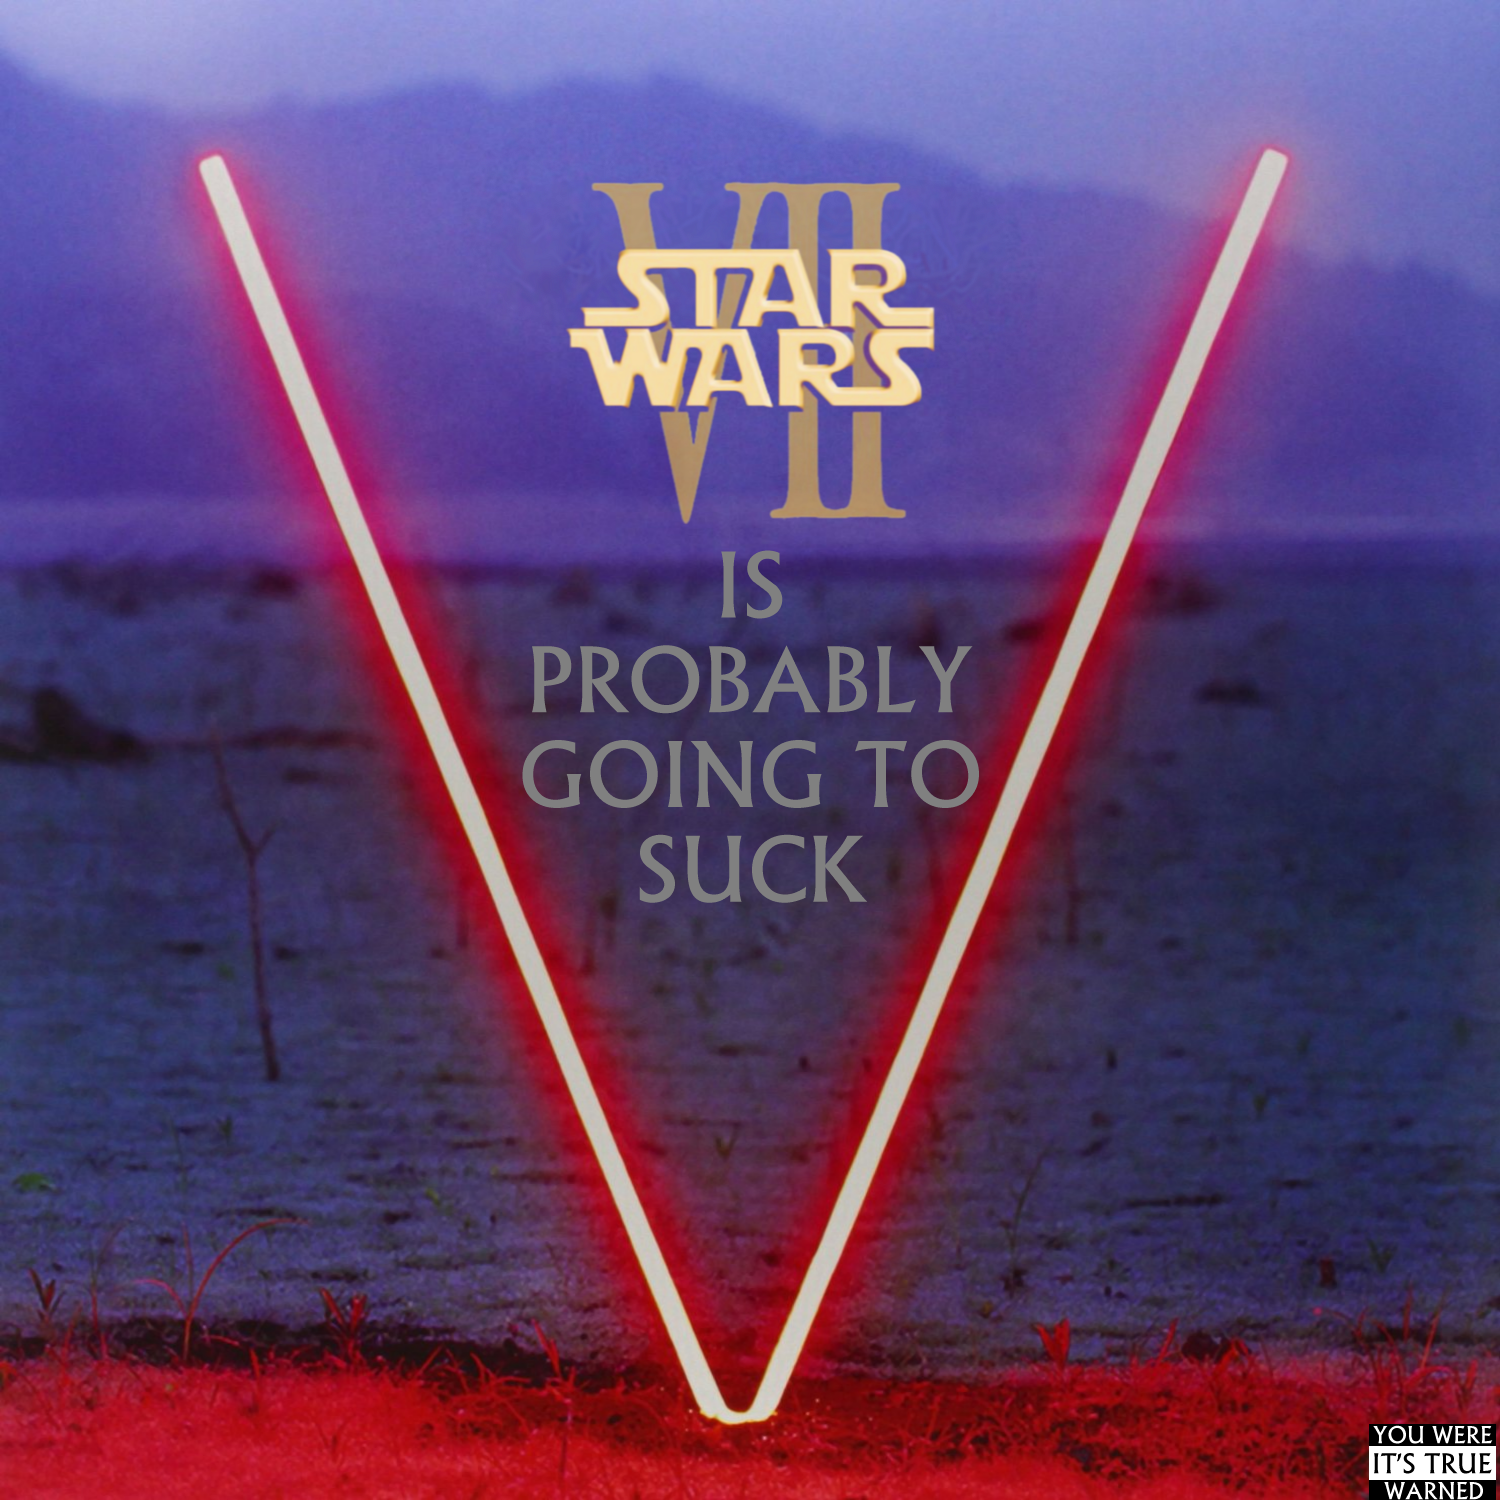 Album cover parody of V [LP][Explicit] by Maroon 5